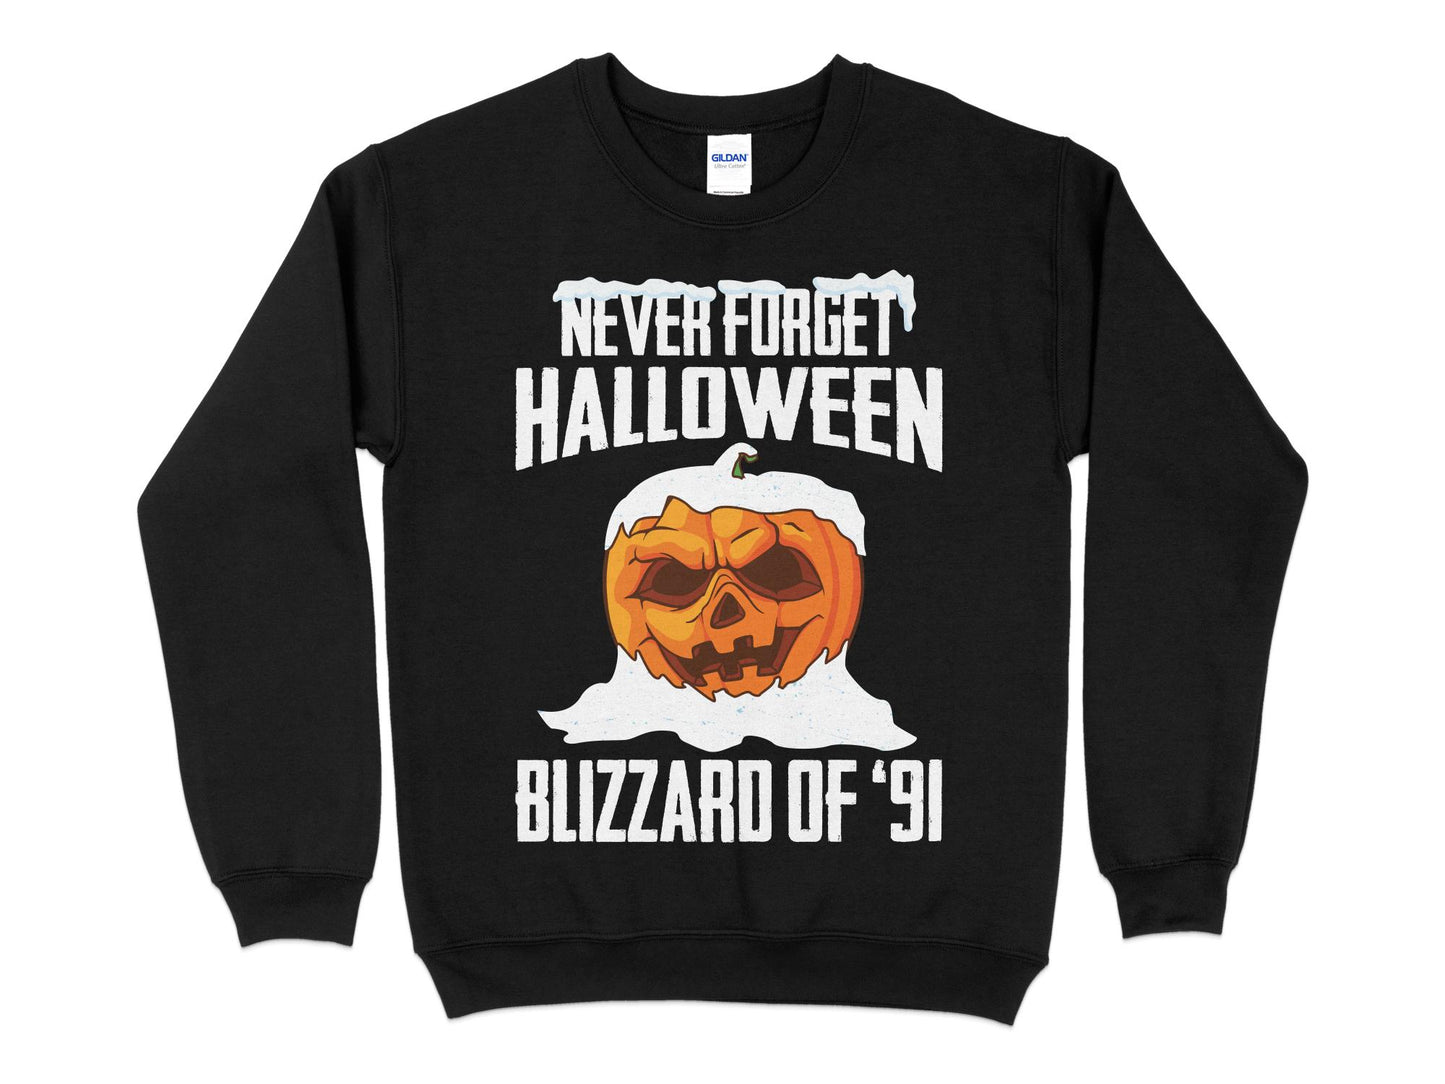 Minnesota Blizzard Halloween 1991 Sweatshirt, black